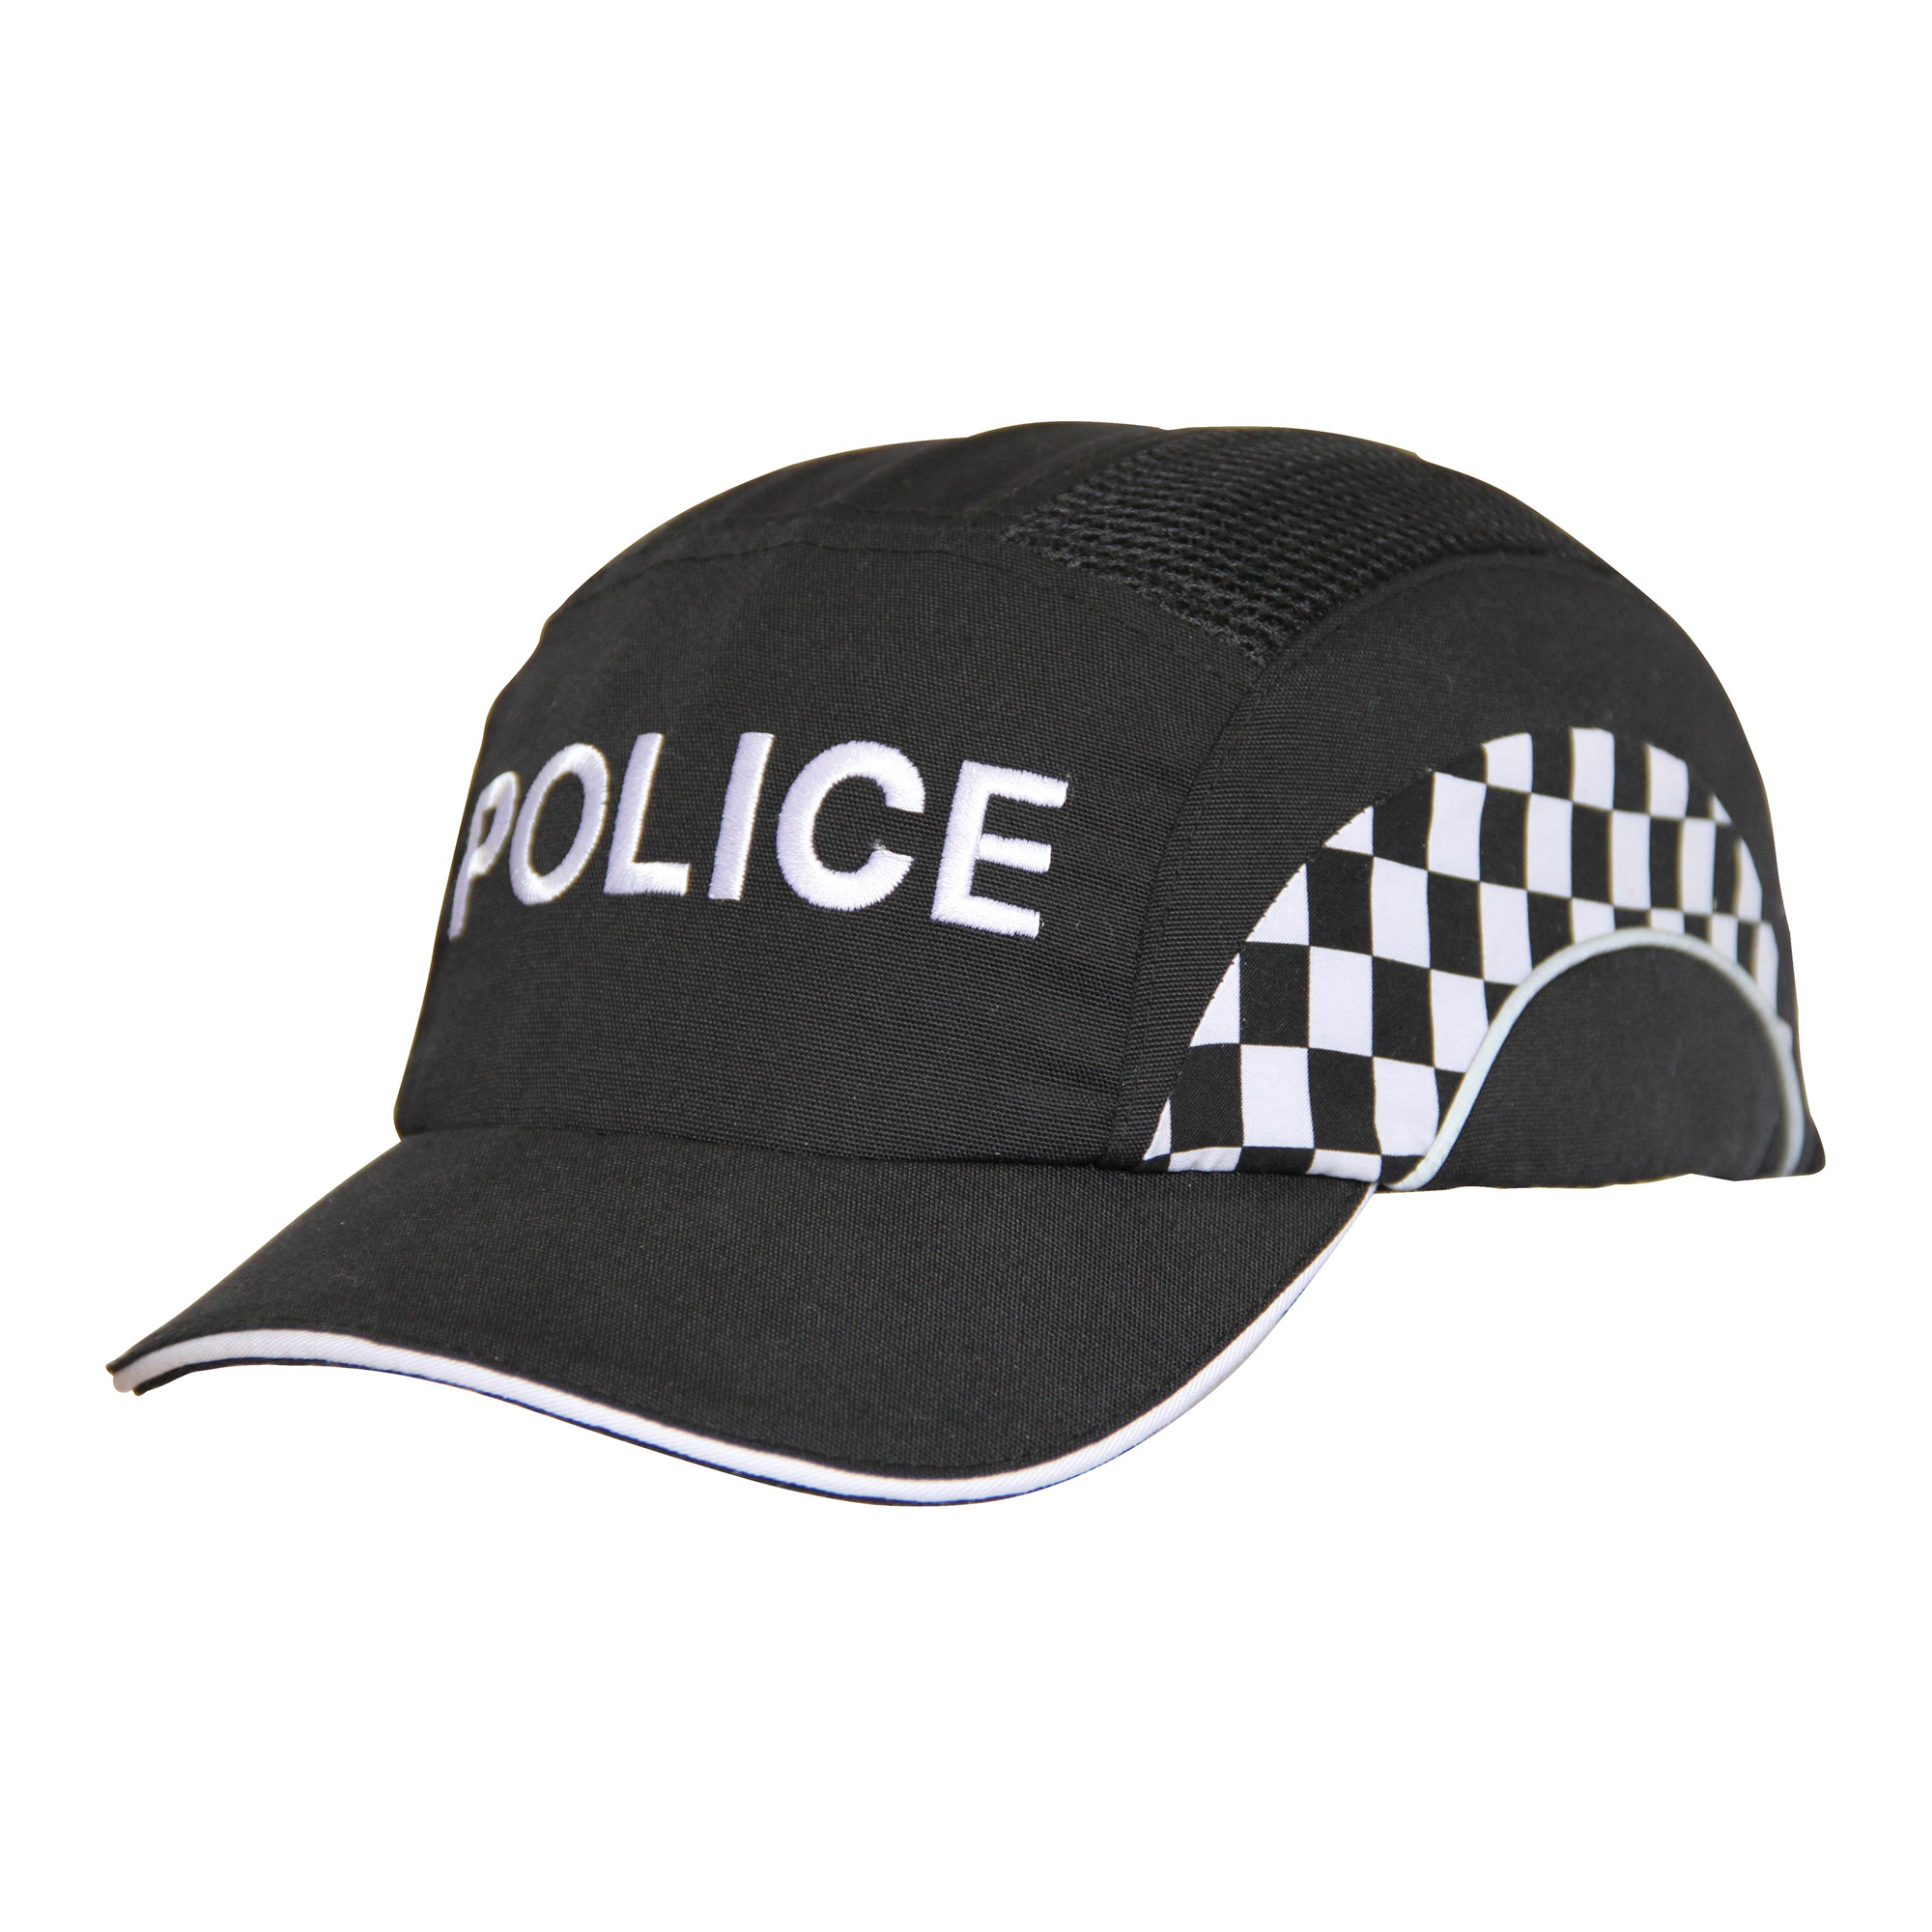 Hardcap A1+ Bump Cap - 7cm Peak - Black / Police Curved Check